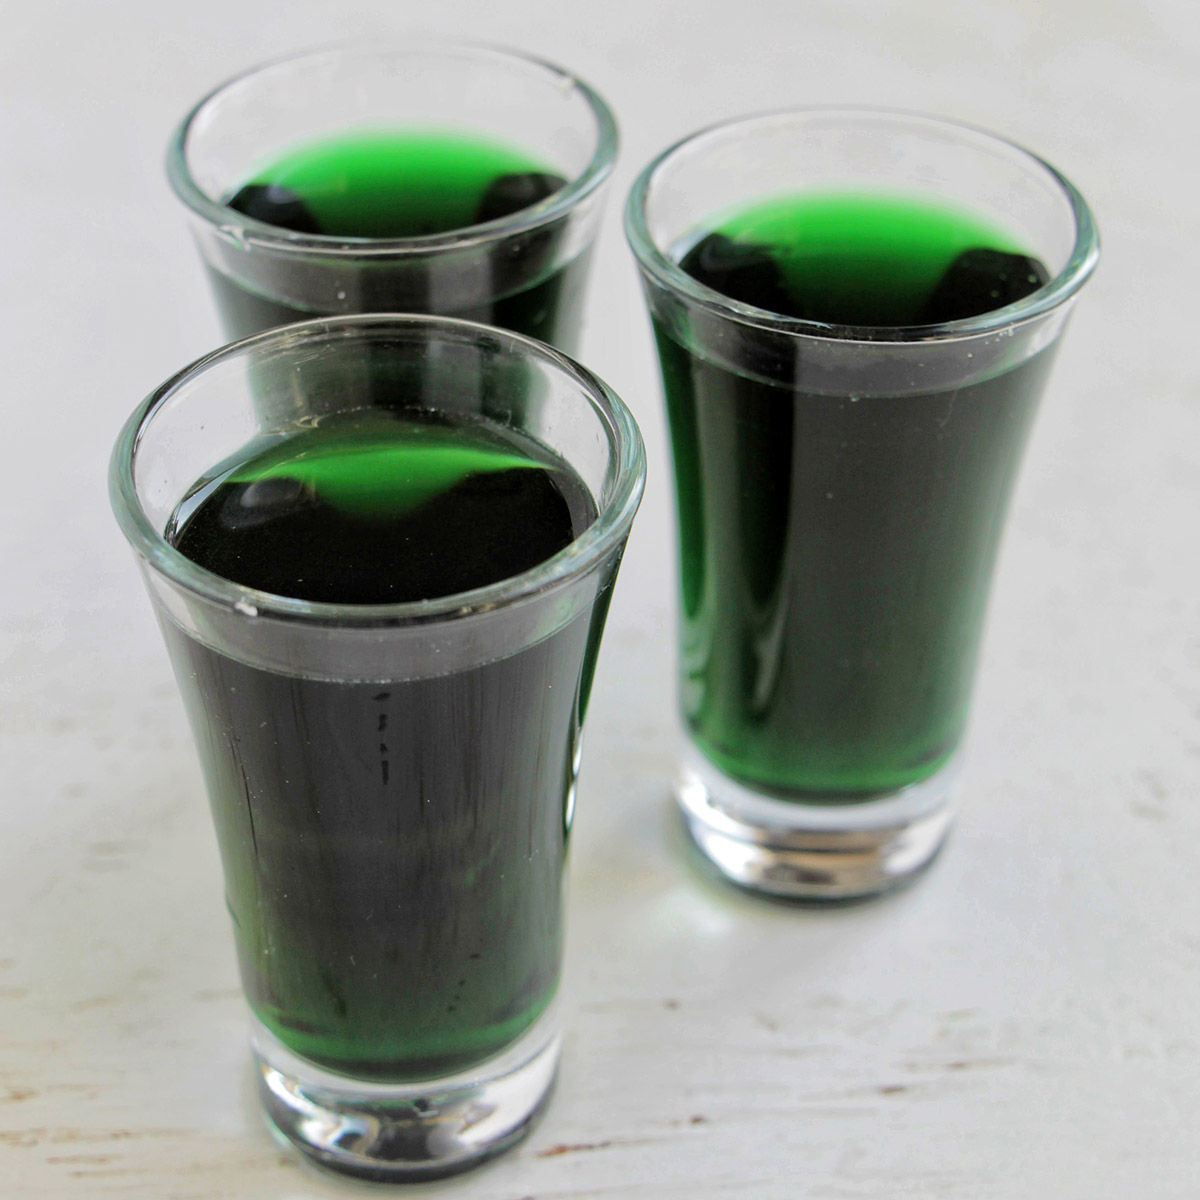 three green shots in clear shot glasses.